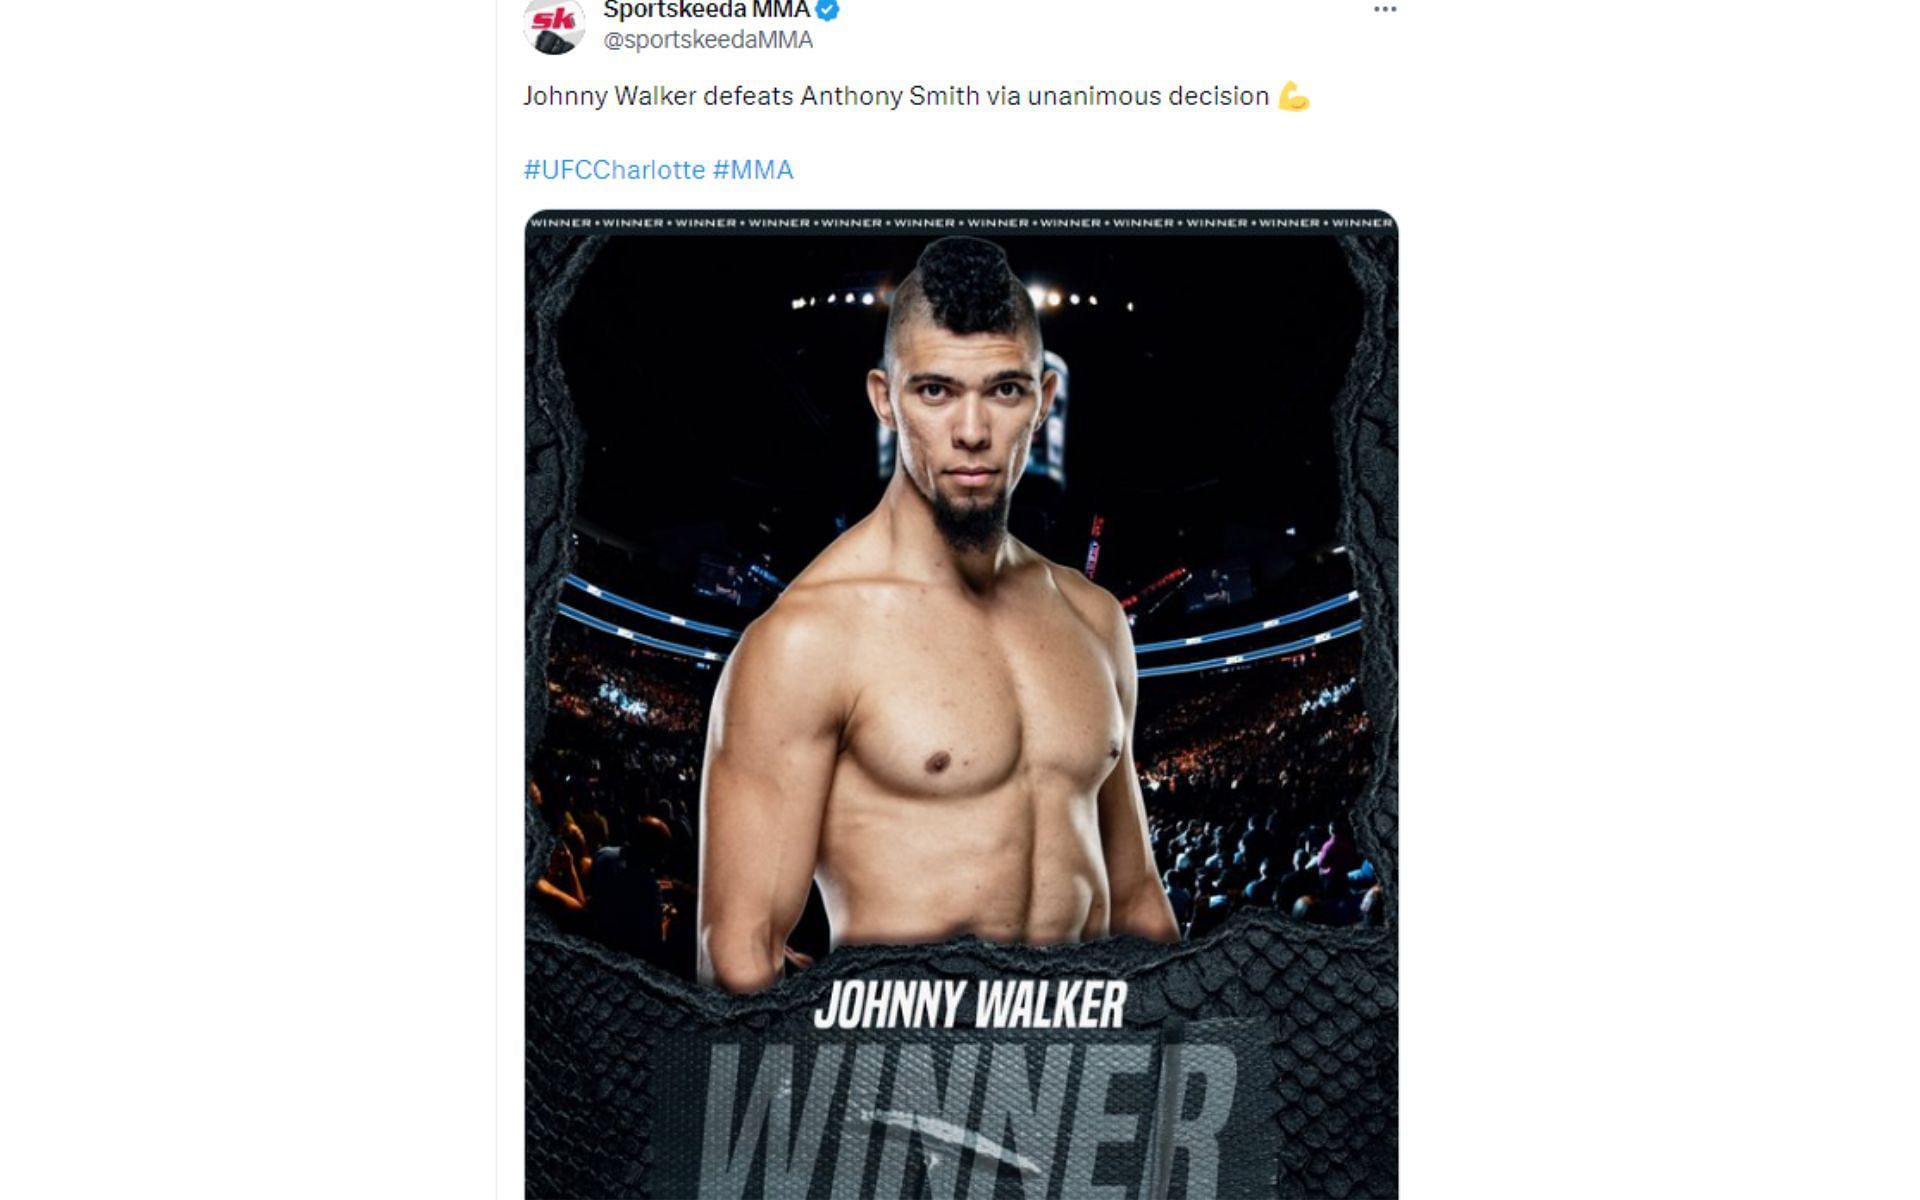 Tweet regarding win over Anthony Smith #UFCCharlotte